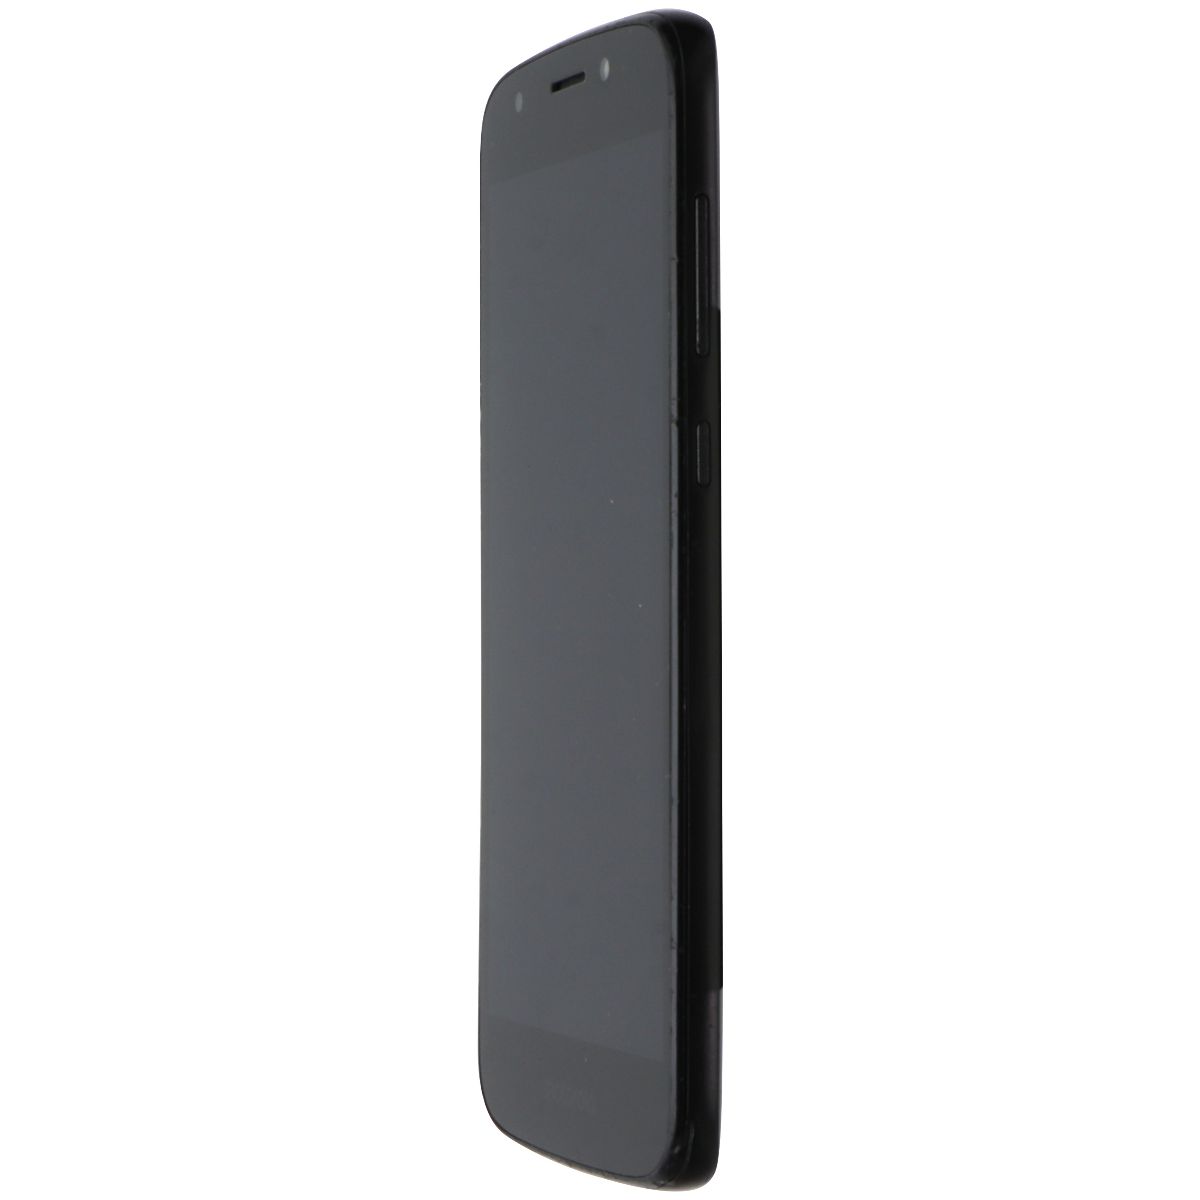 Motorola Moto E5 Play Smartphone (XT1921-6) Verizon 16GB - Black Cell Phones & Smartphones Motorola    - Simple Cell Bulk Wholesale Pricing - USA Seller